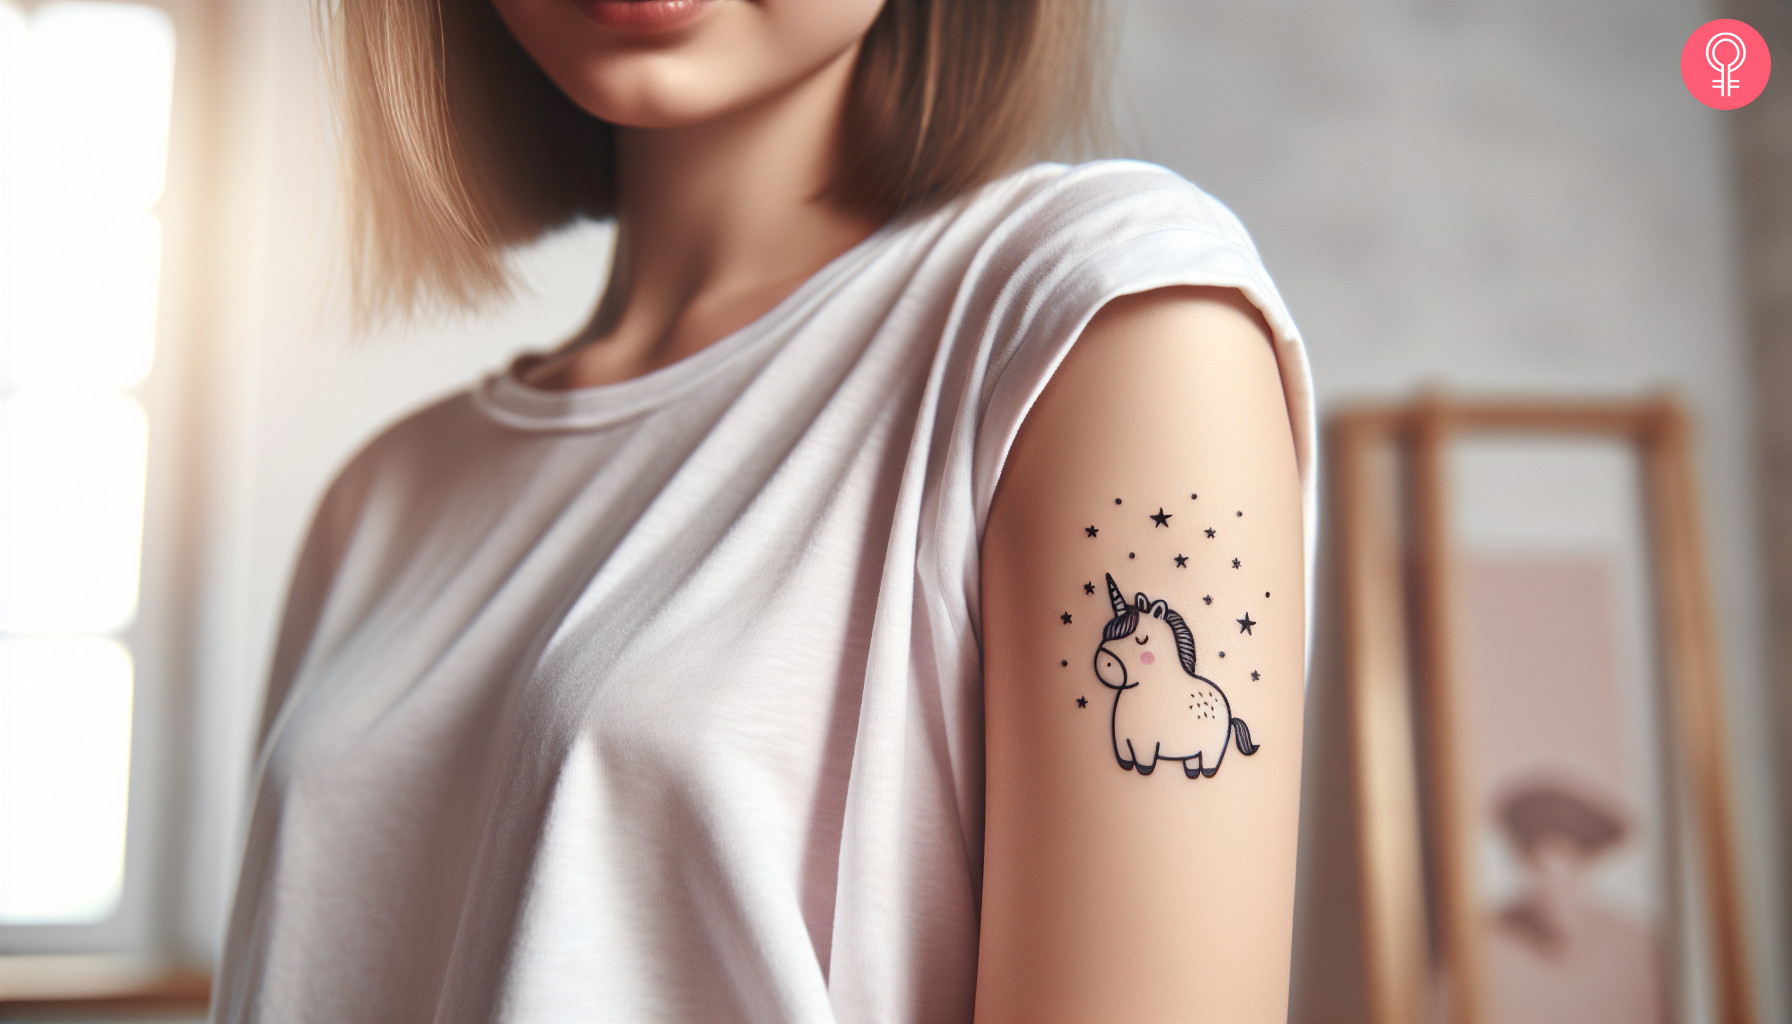 A minimalist fantasy tattoo on the arm